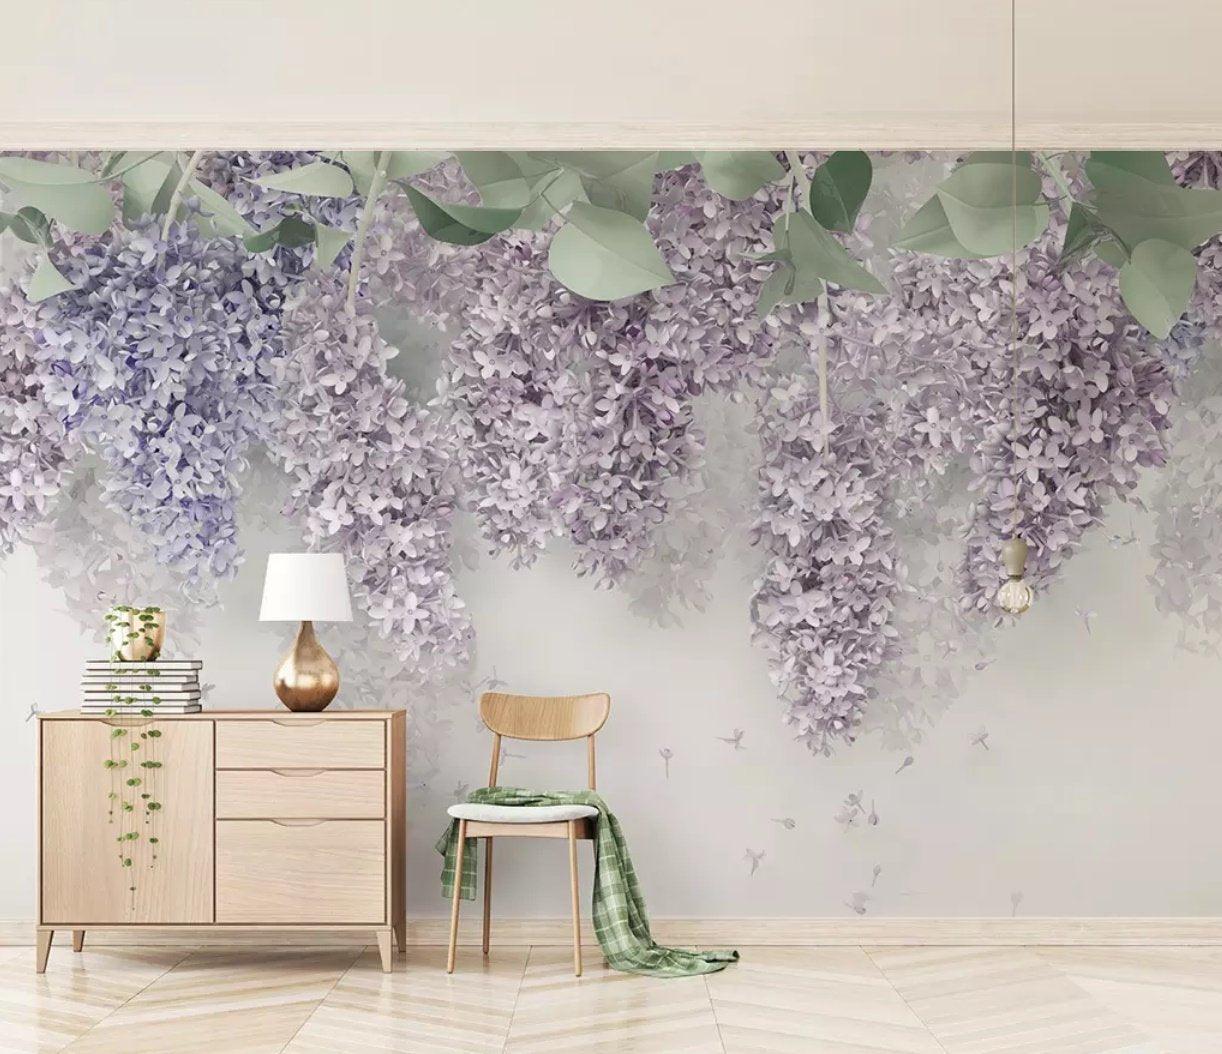 3D Retro Lavender Floral Wall Mural Removable 182- Jess Art Decoration